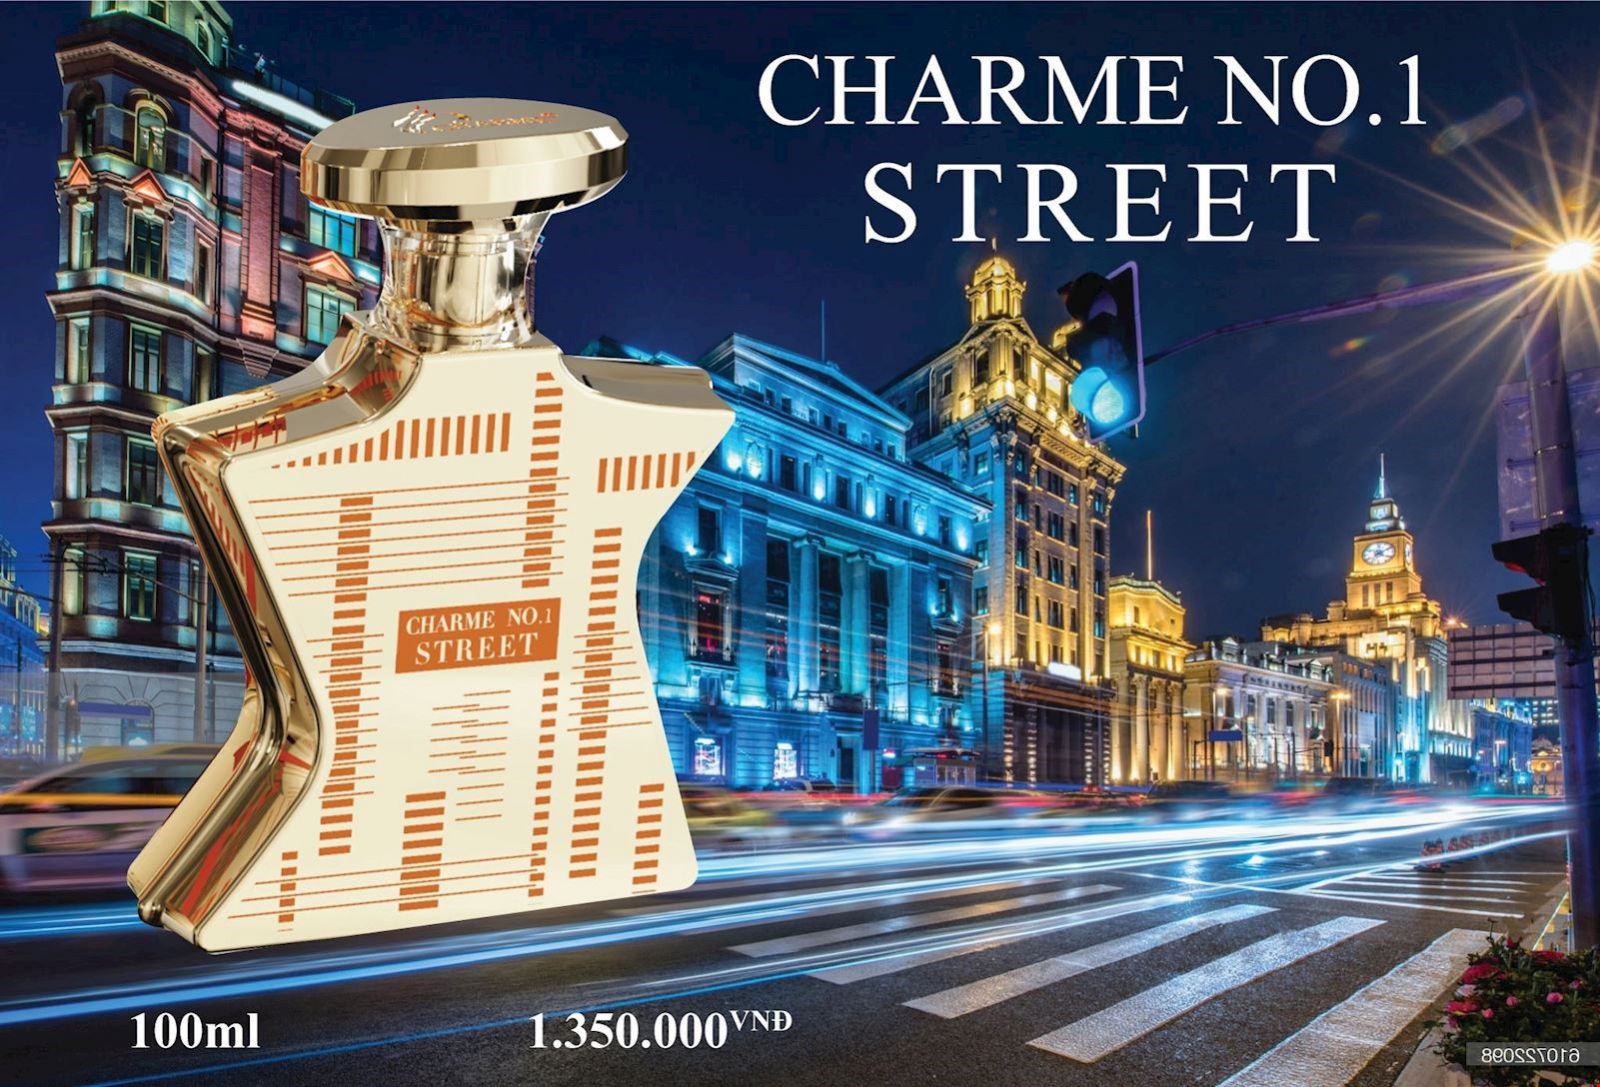 nuoc-hoa-charme-no-1-street-100ml